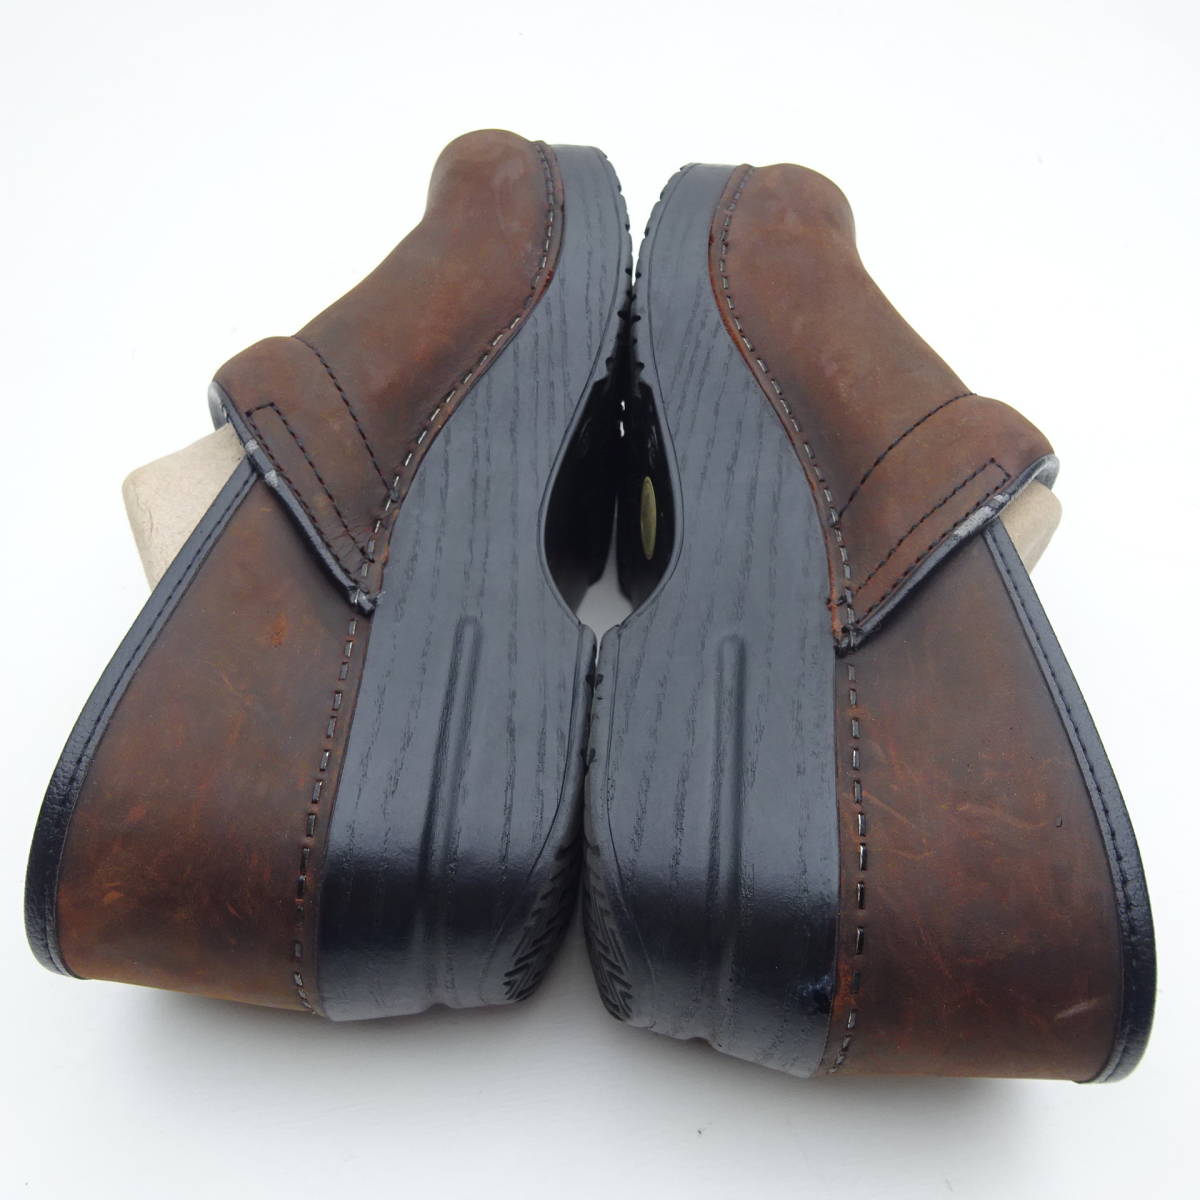 DANSKO Professional Dance ko сабо Professional обувь сабо s натуральная кожа сабо комфорт обувь обувь женский (38) чай 